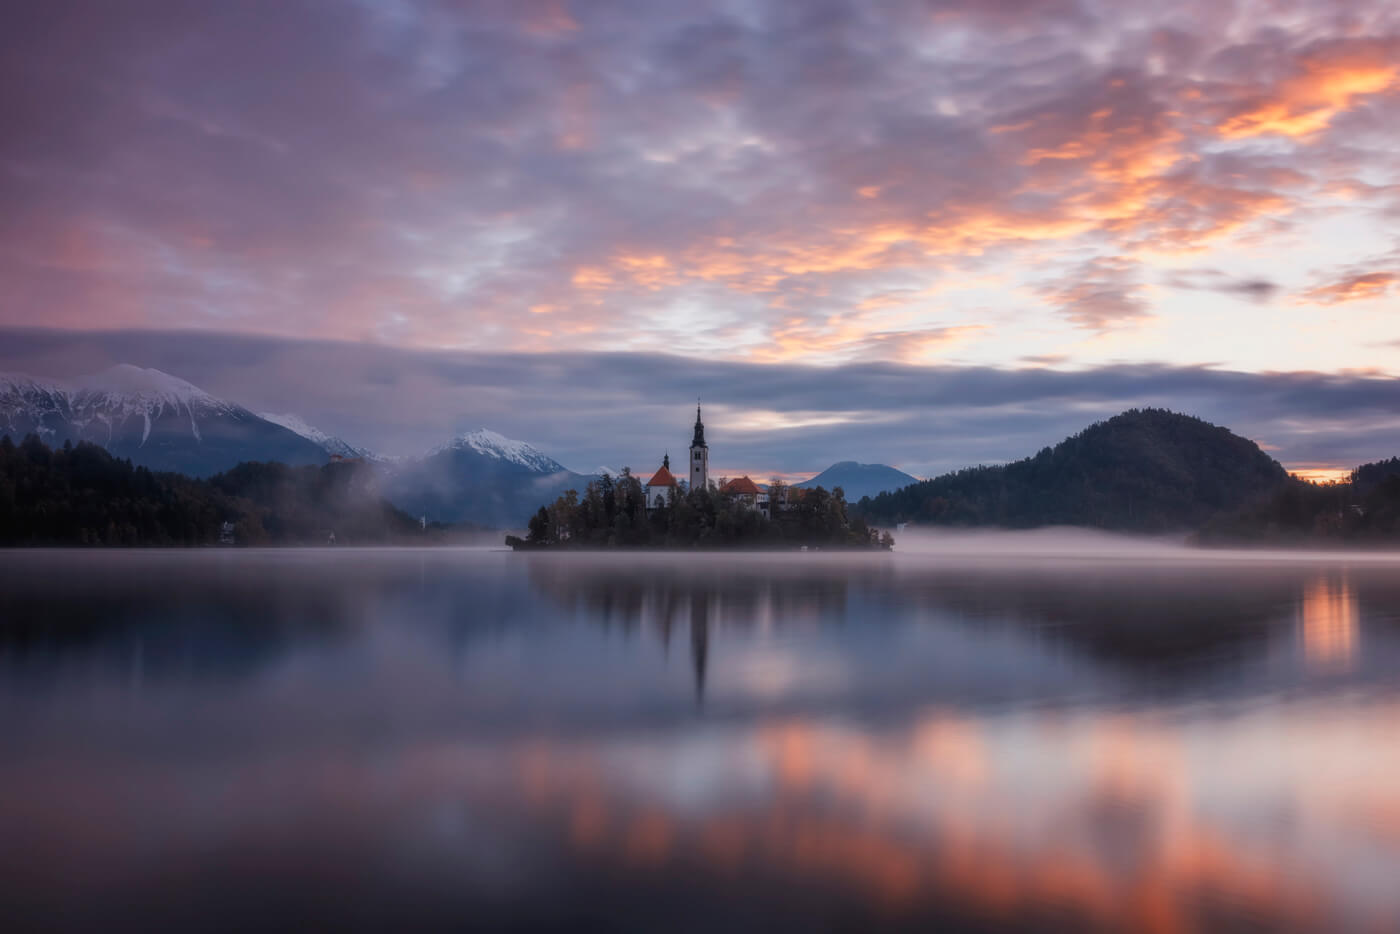 Misty Morning at Lake Bled, photos of Slovenia